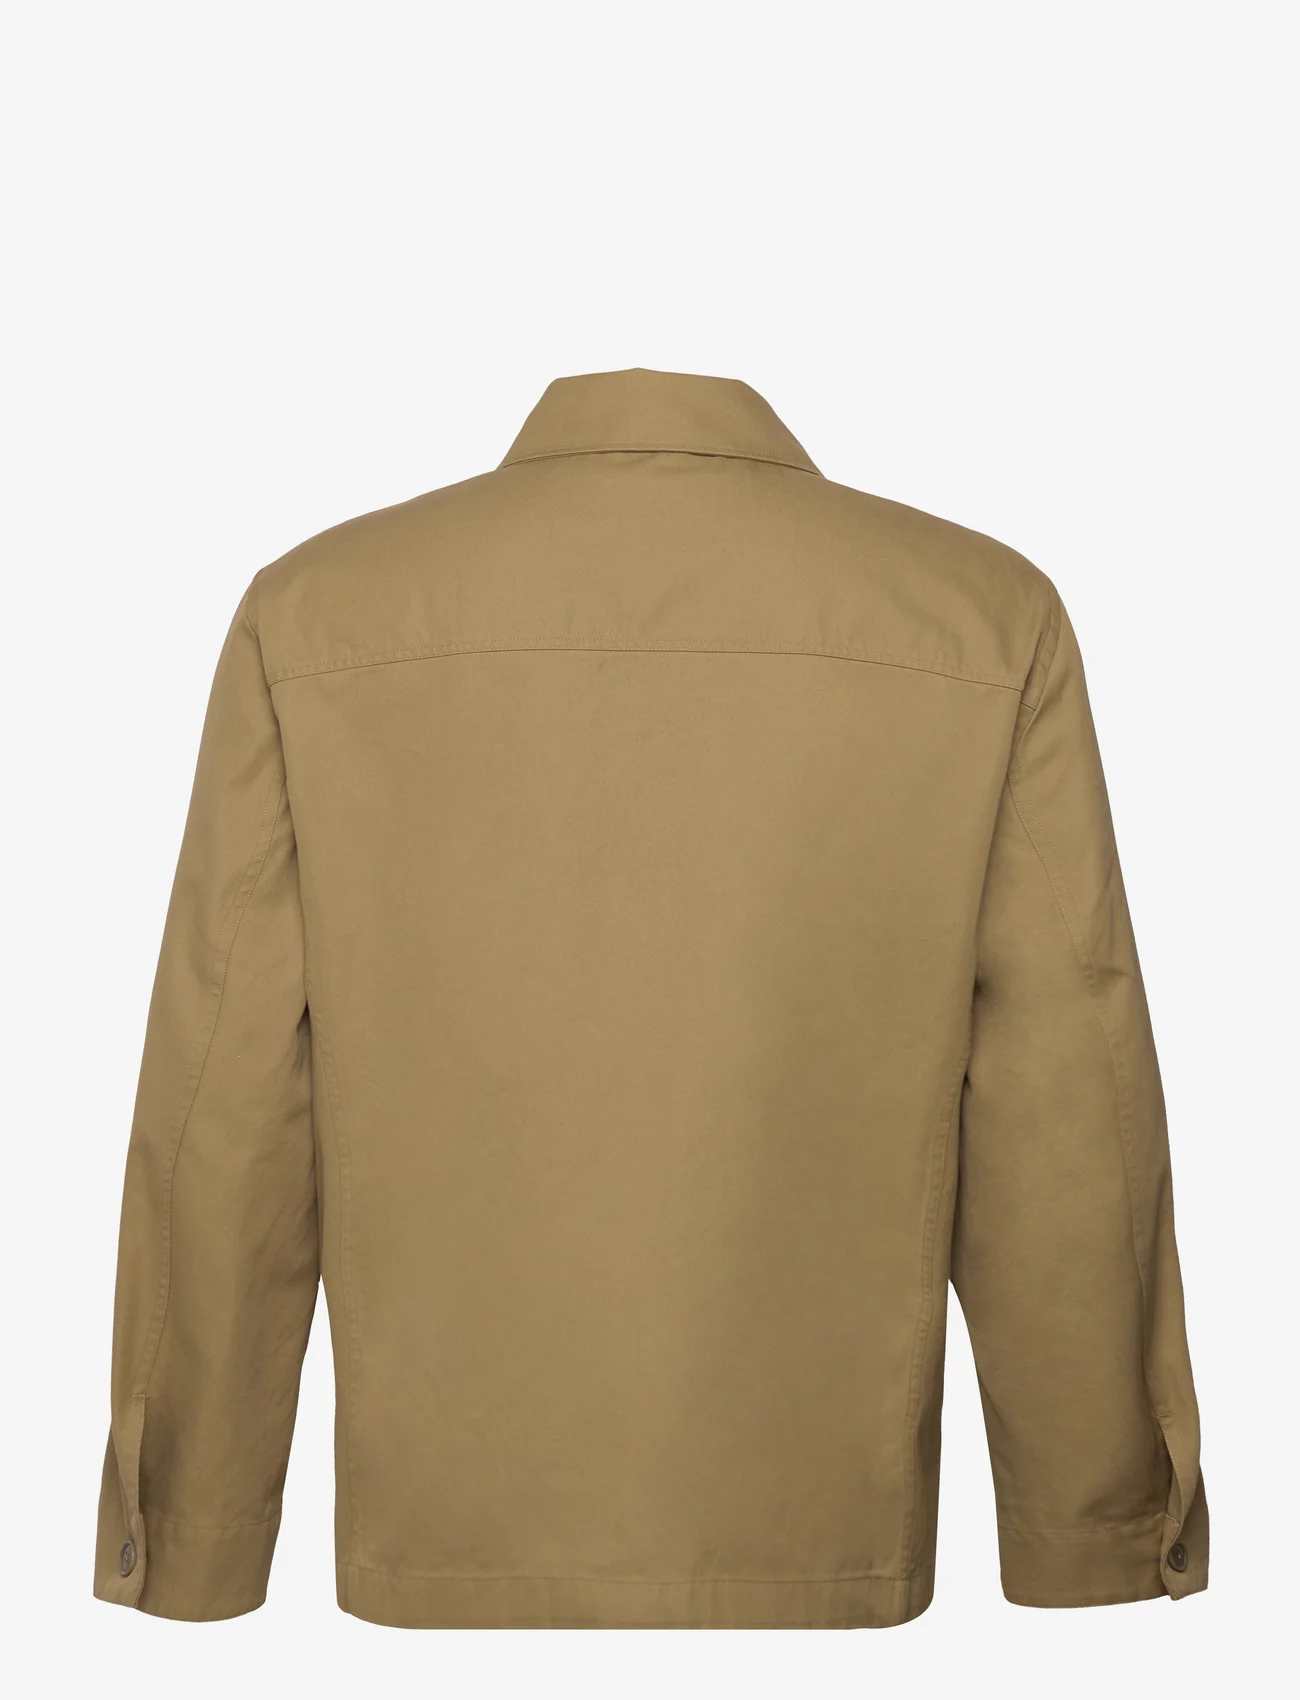 Filippa K - Cotton Workwear Jacket - mænd - khaki gree - 1